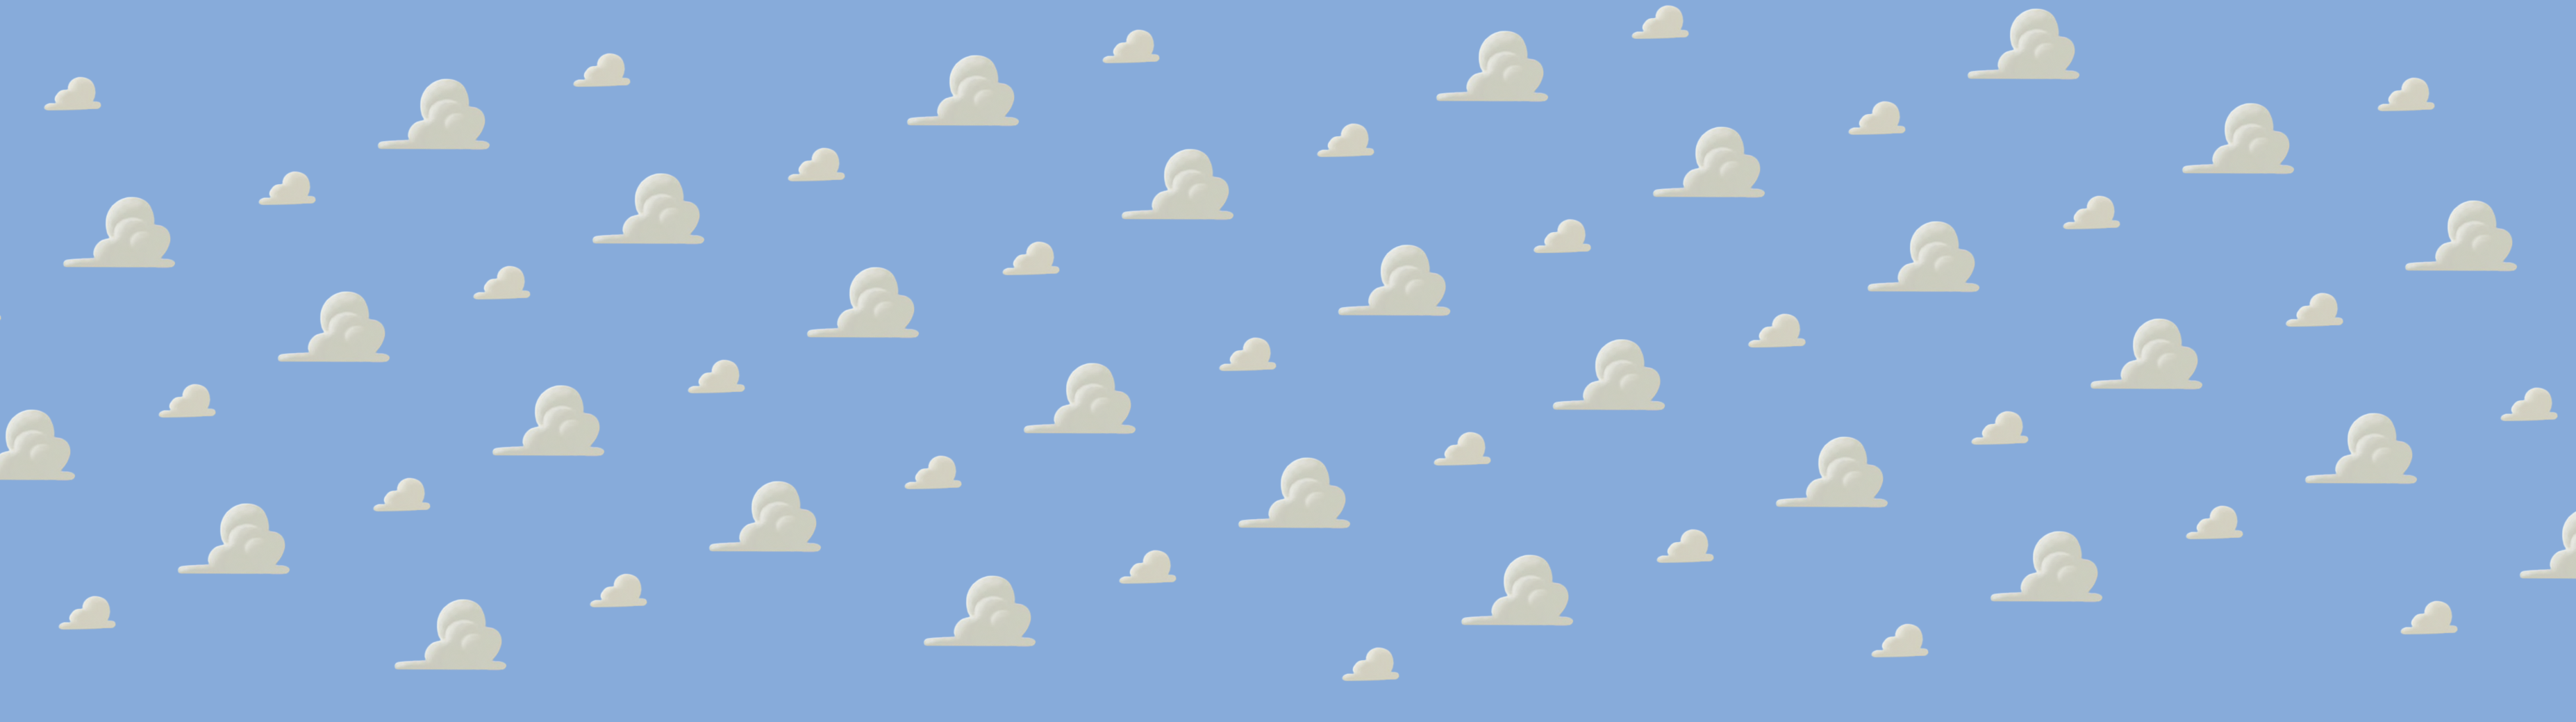 Toy Story - Cloud Wallpaper (HQ Recreation) by LuxoVeggieDude9302 on  DeviantArt